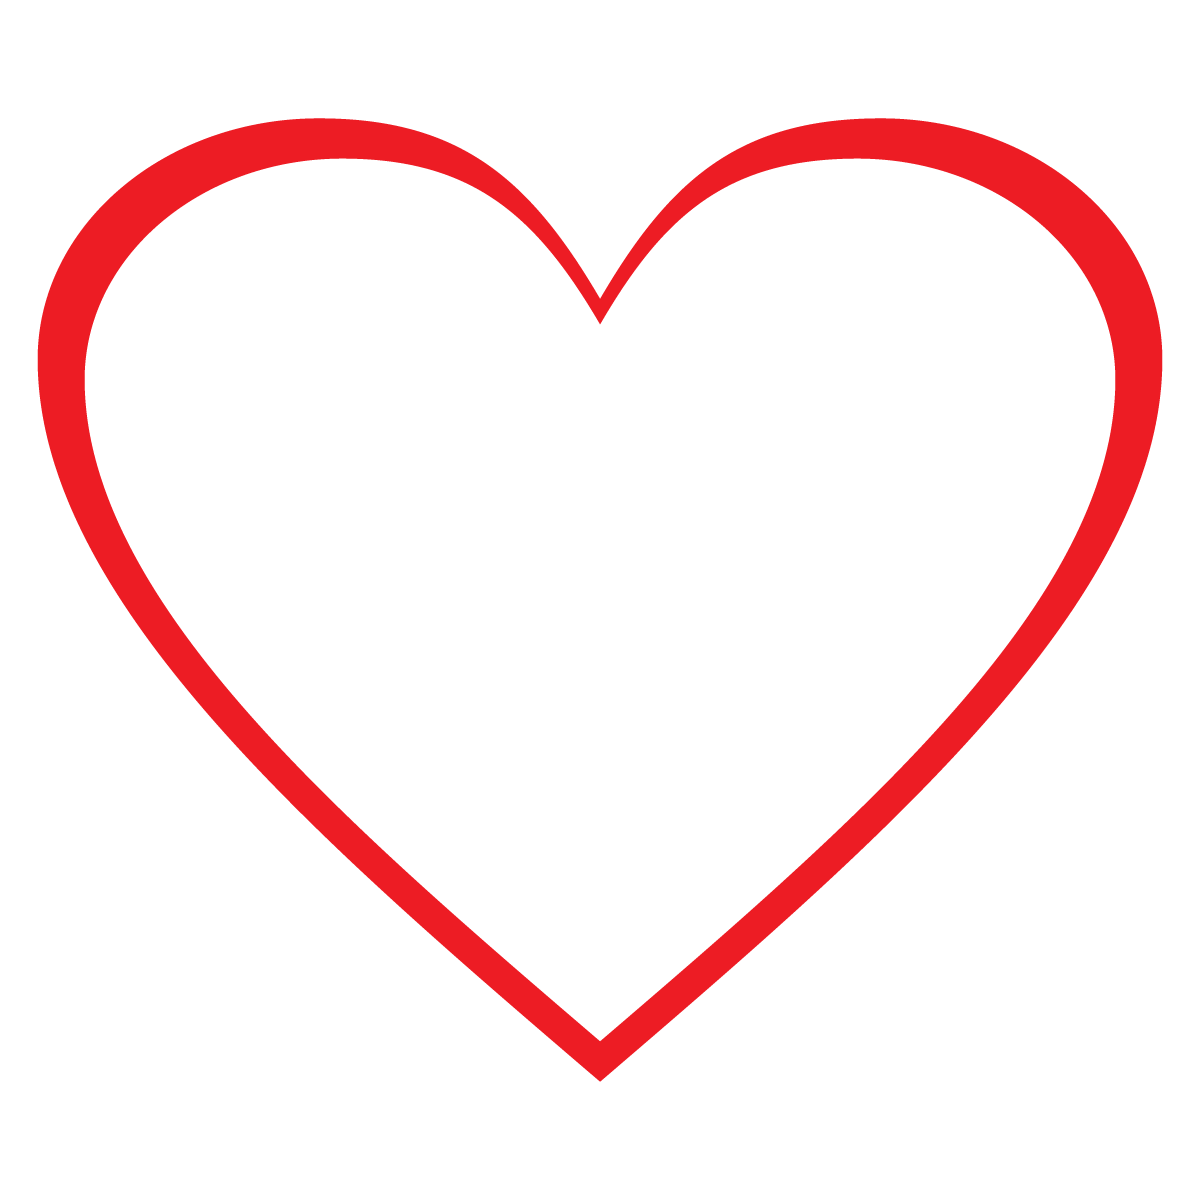 Love heart clip art